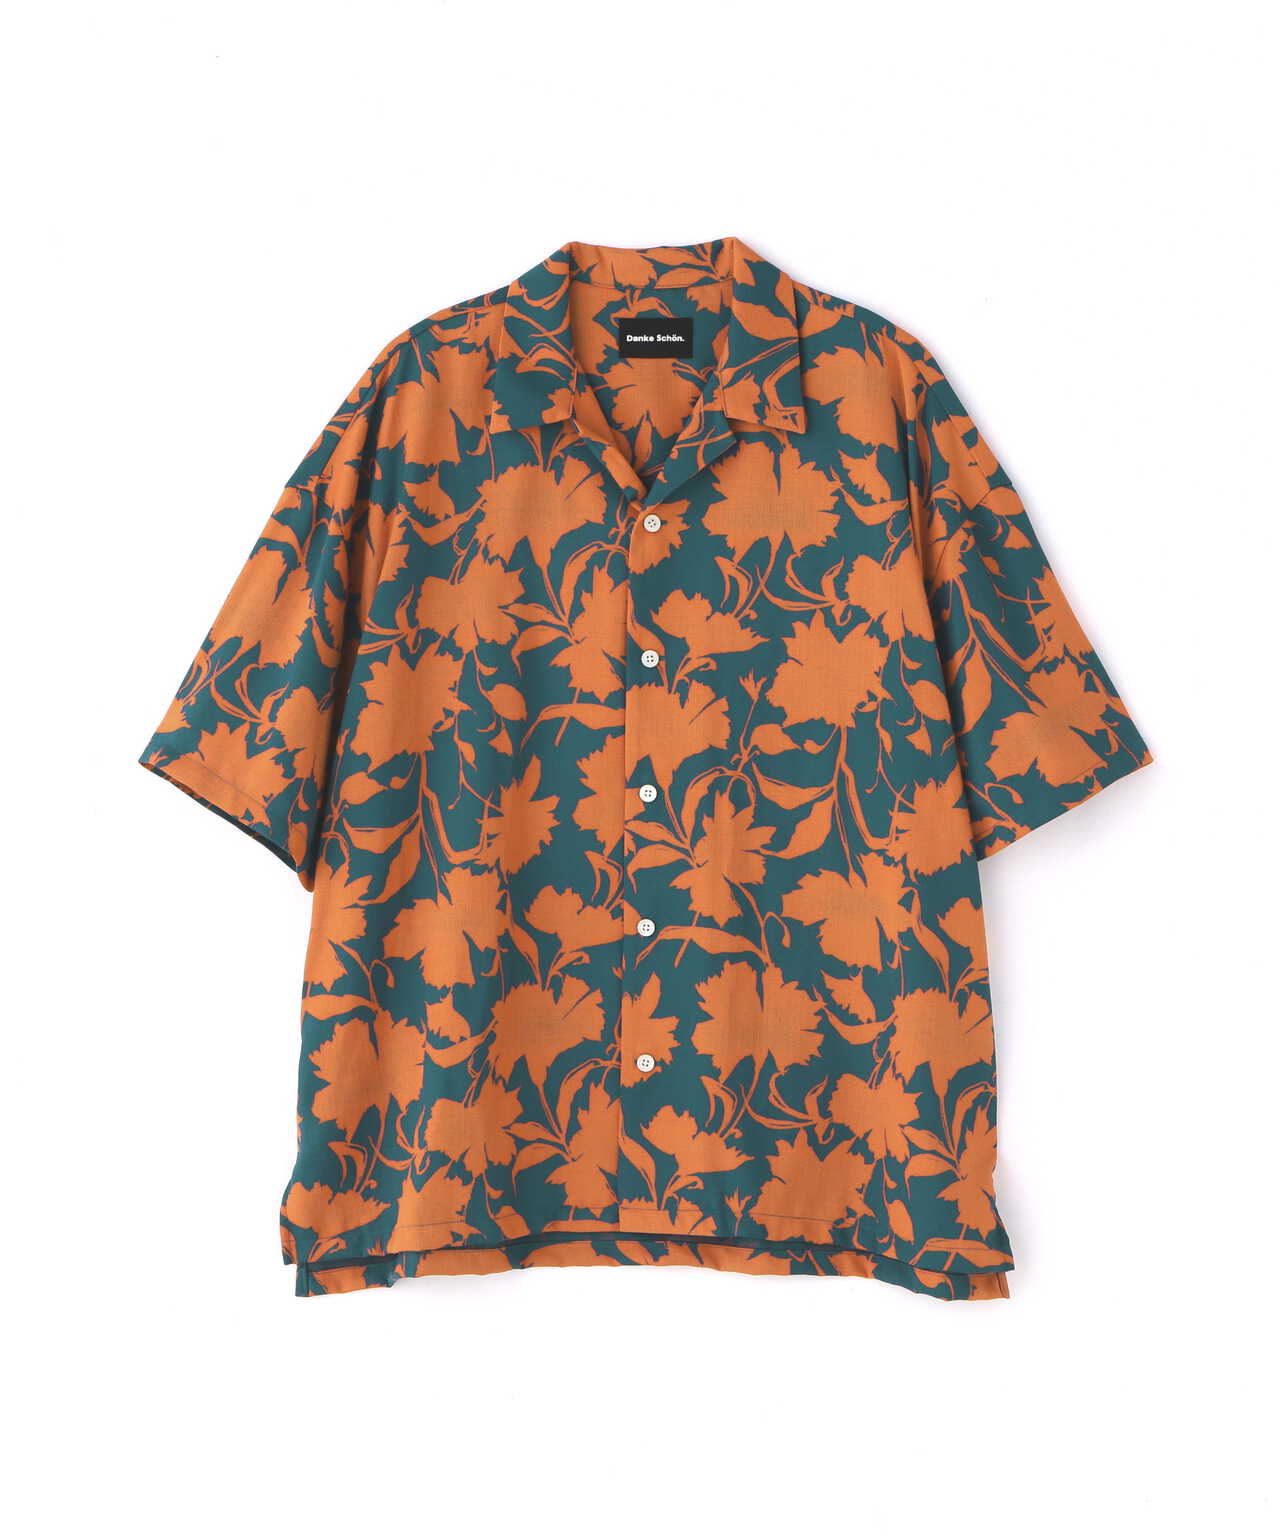 Dankeschon/ダンケシェーン/Flower Butcher Shirt/オープンカラーシャツ